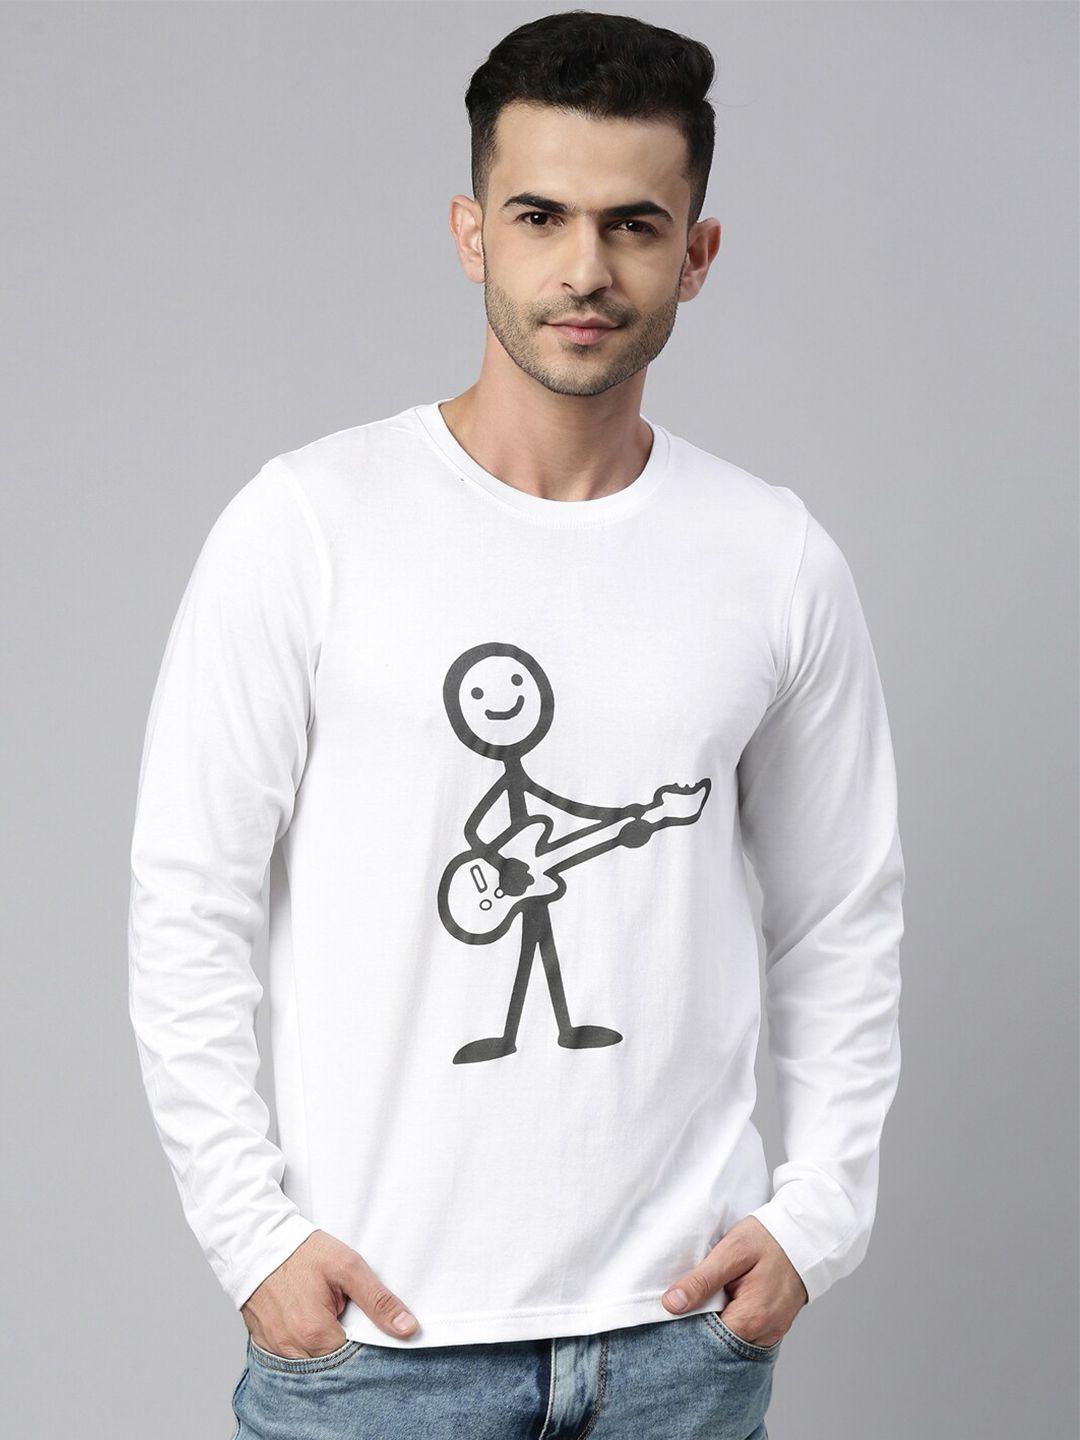 bushirt men white guitar boy printed t-shirt